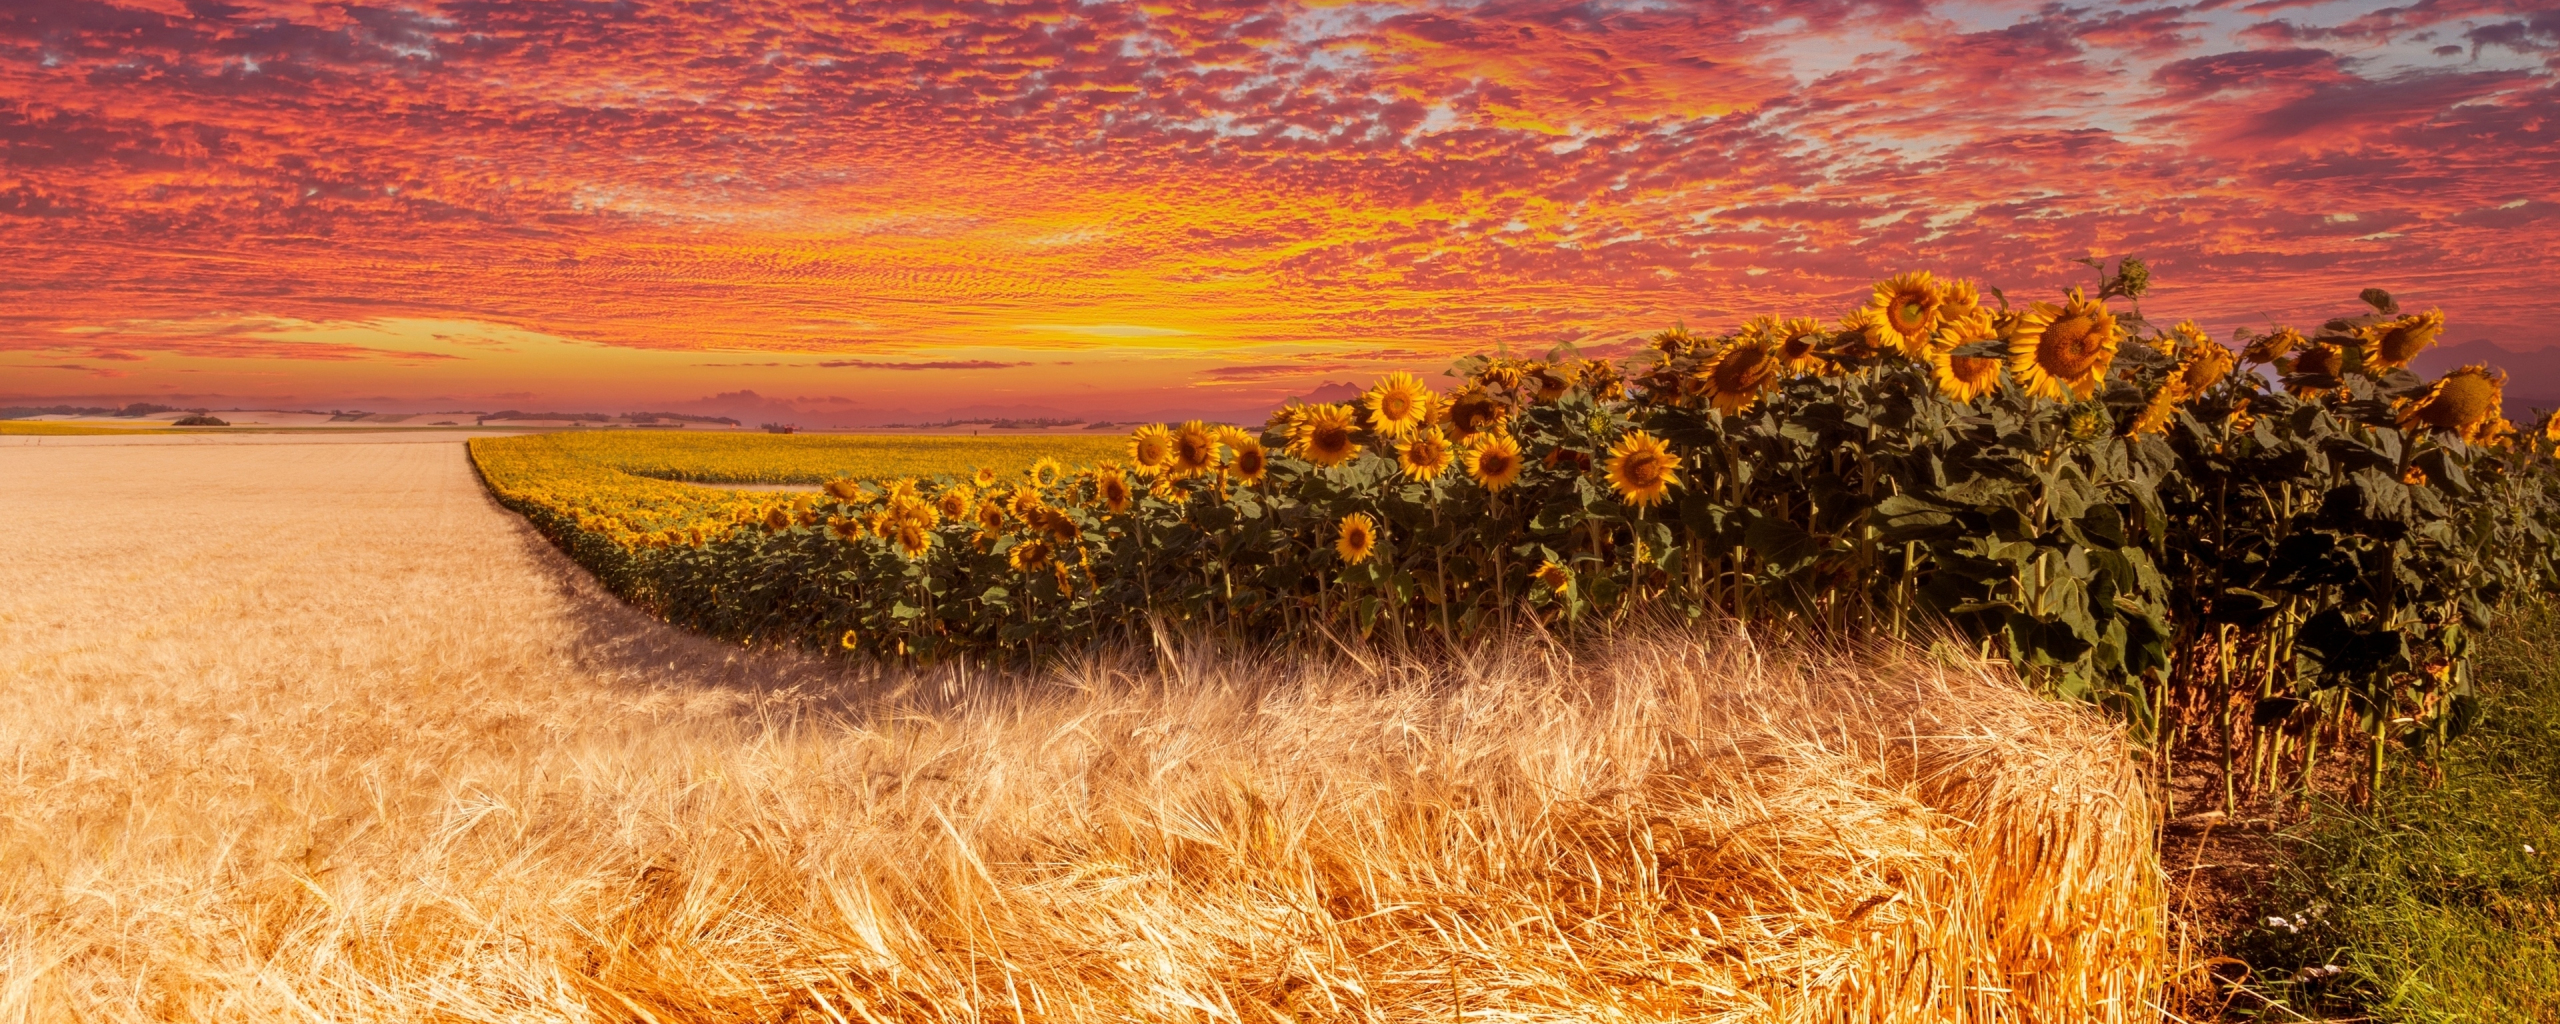 Wheat and sunflower farm, sunset, 2560x1024 wallpaper